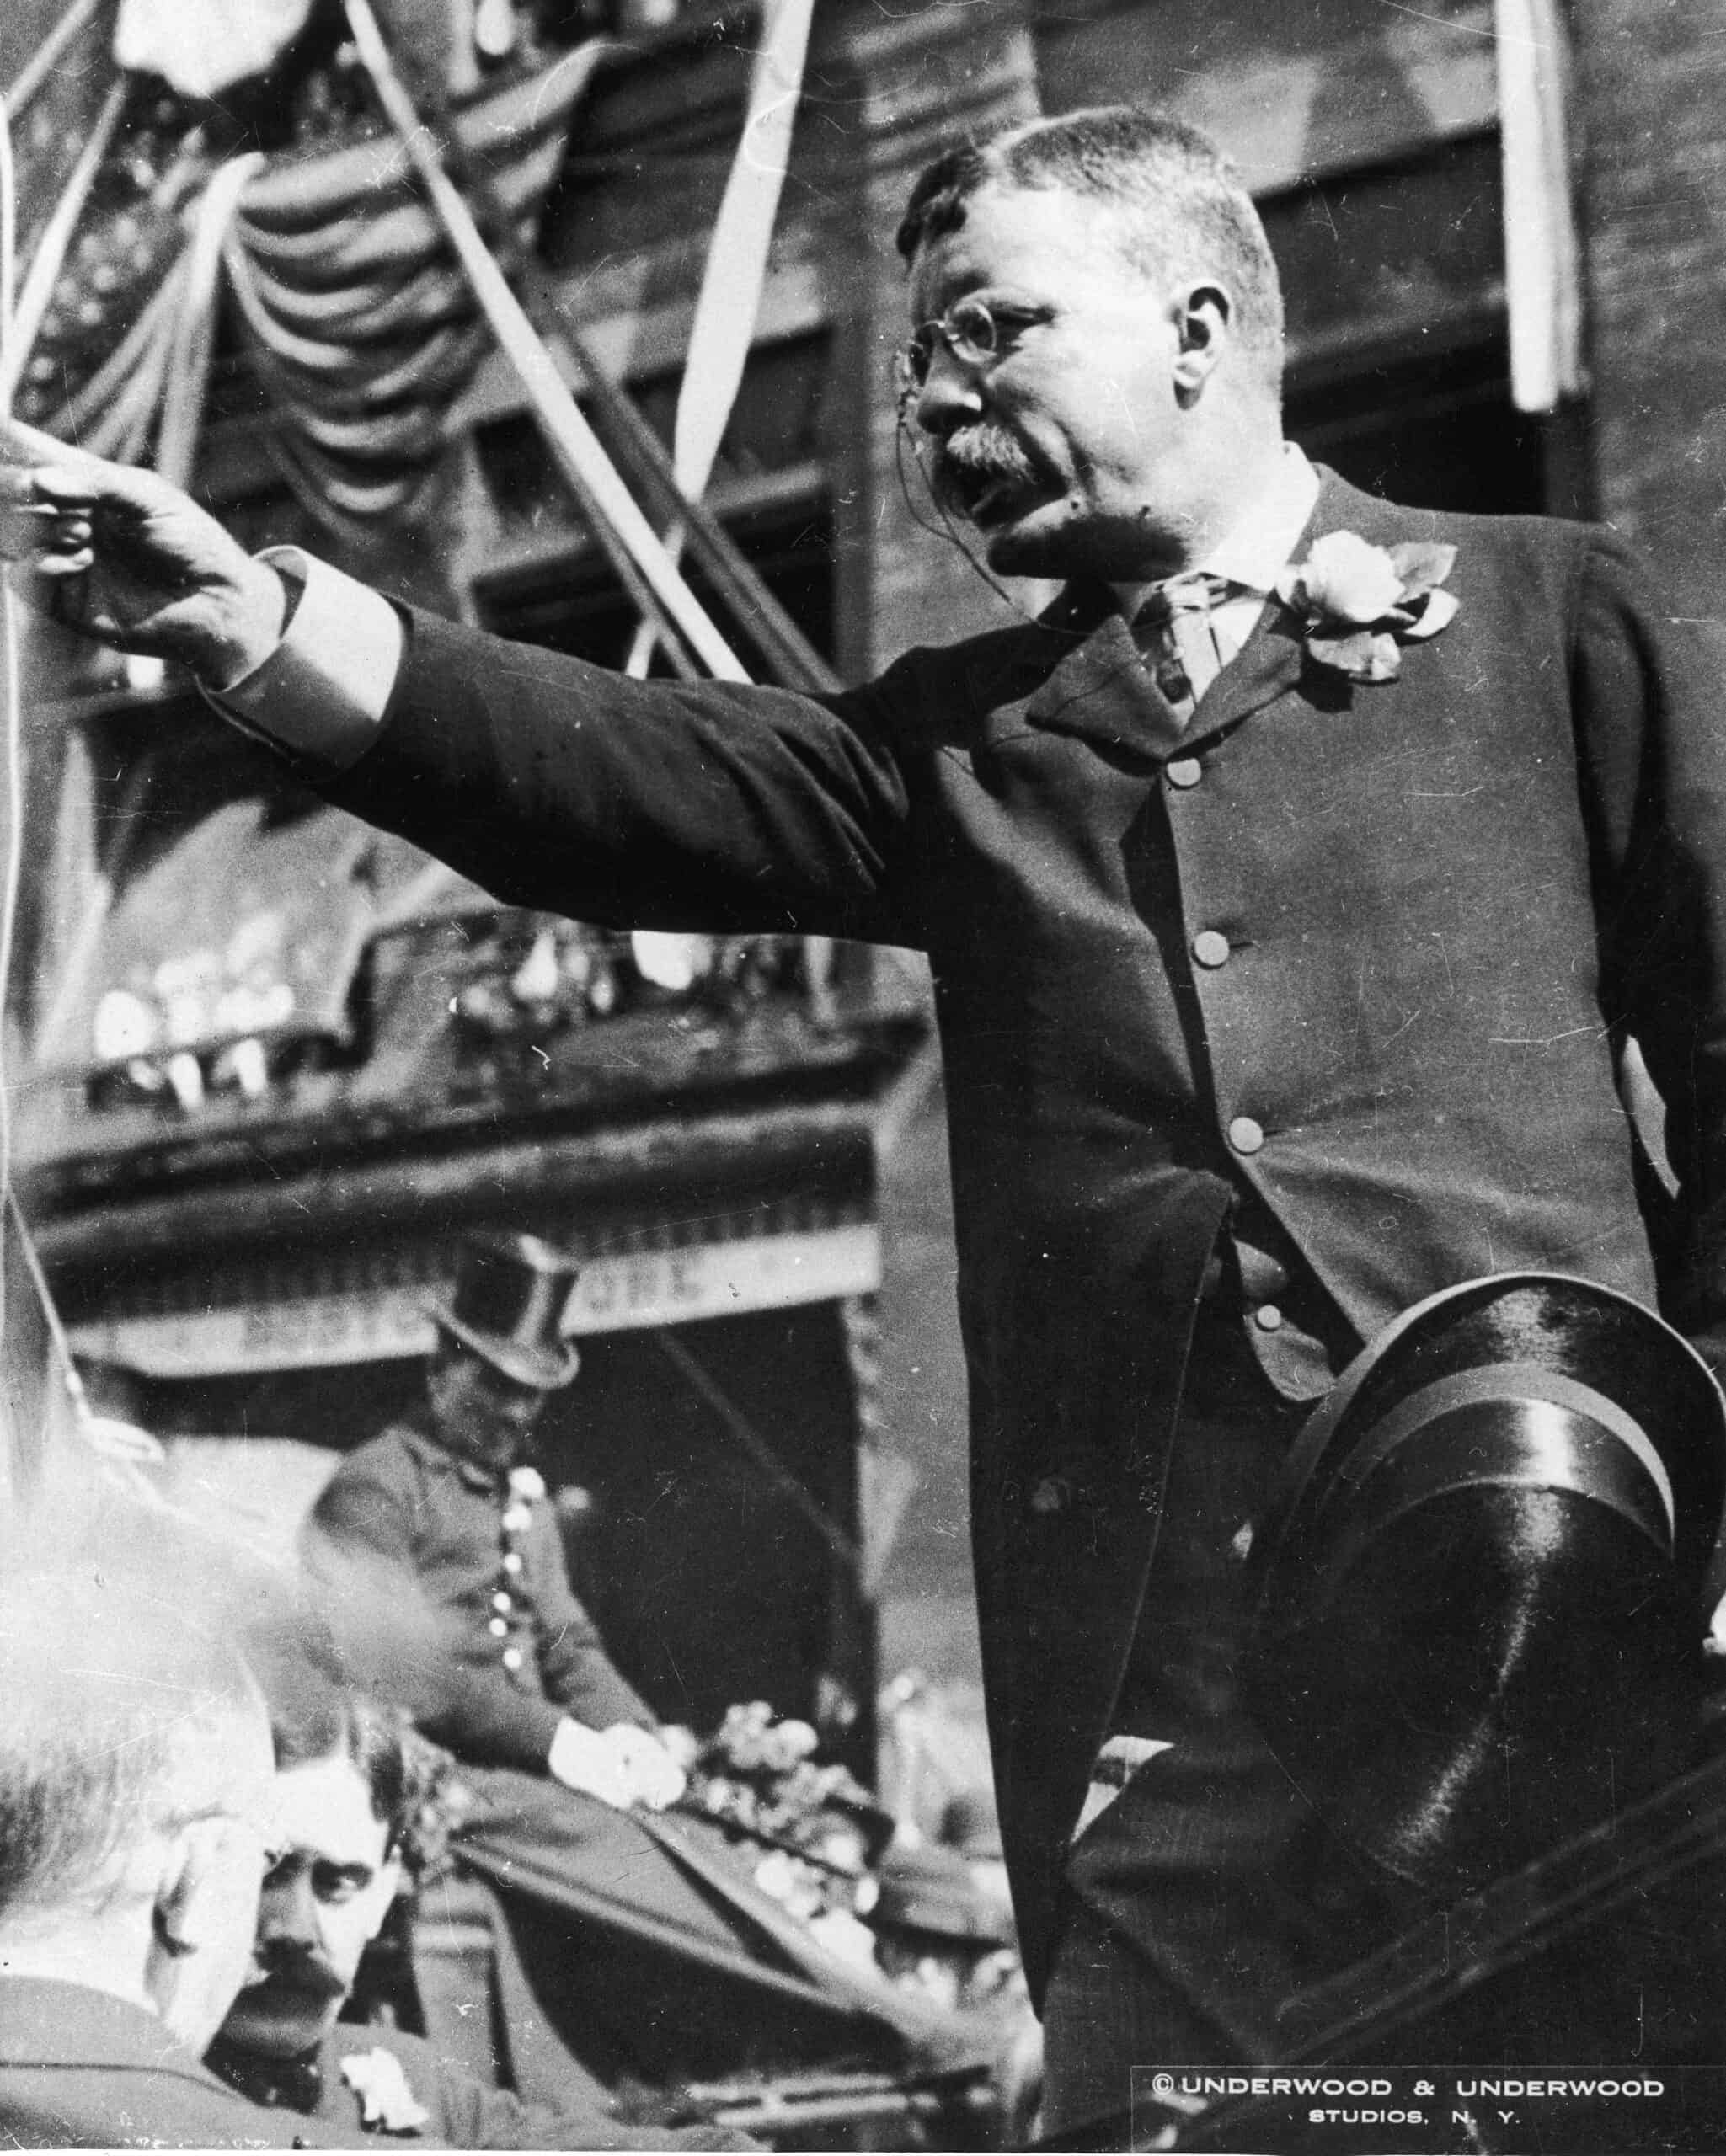 President Theodore Roosevelt